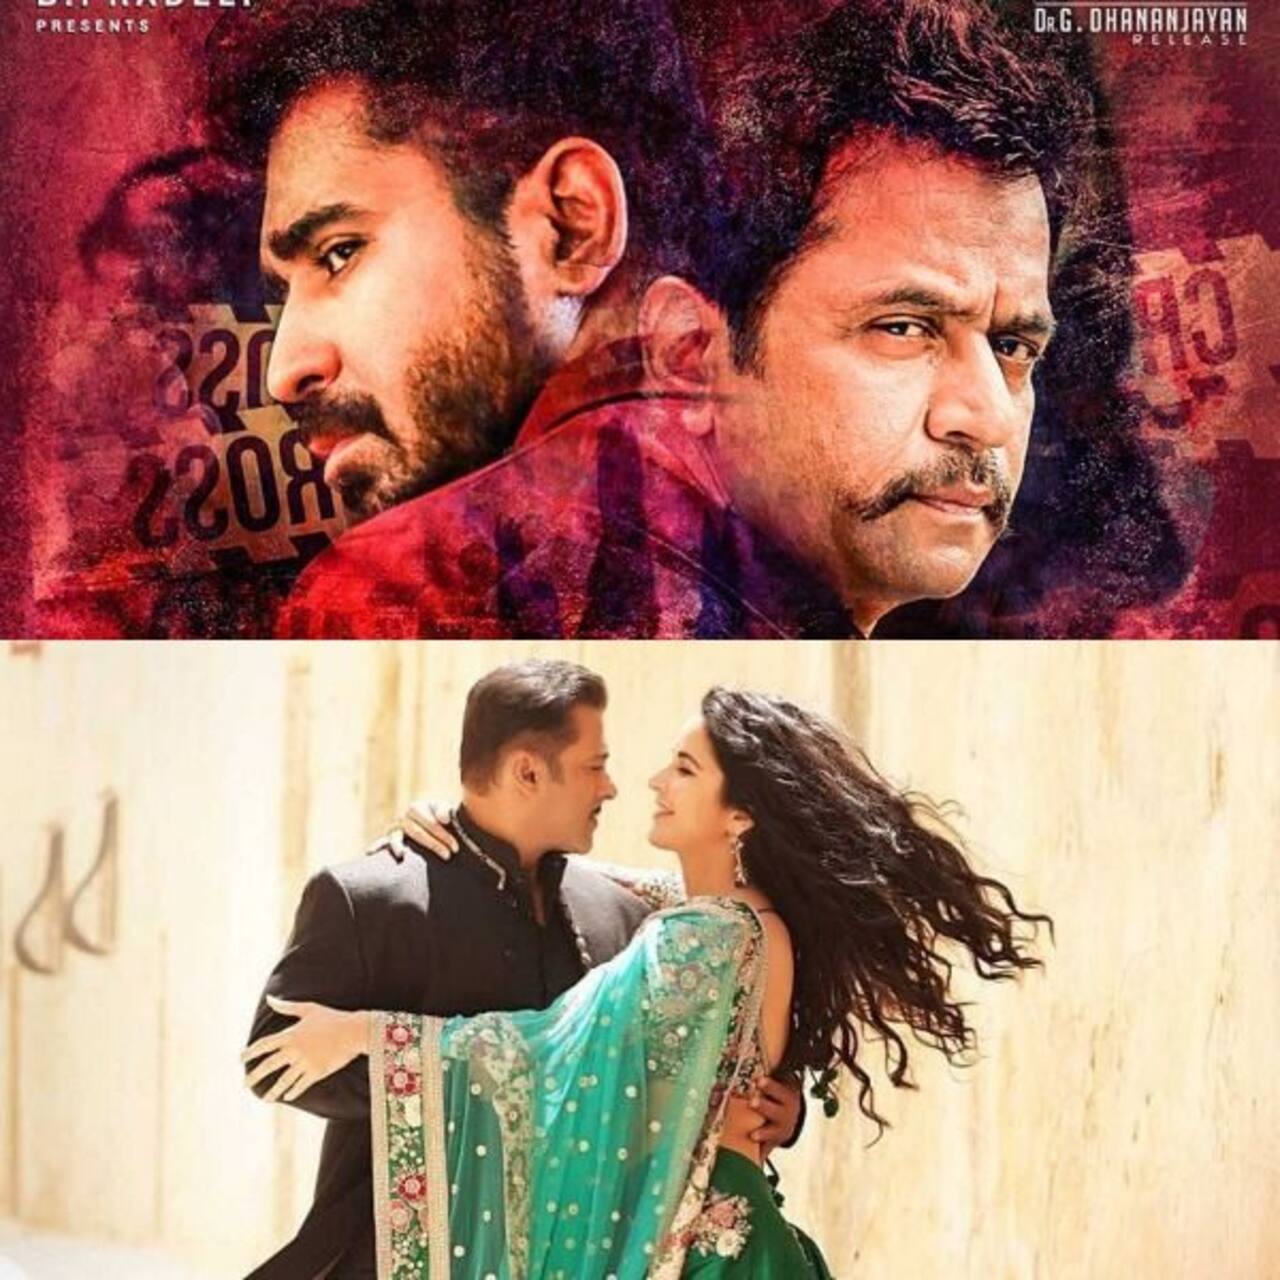 Chennai box office: Vijay Antony's Kolaigaran BEATS Salman Khan's Bharat to grab the top spot